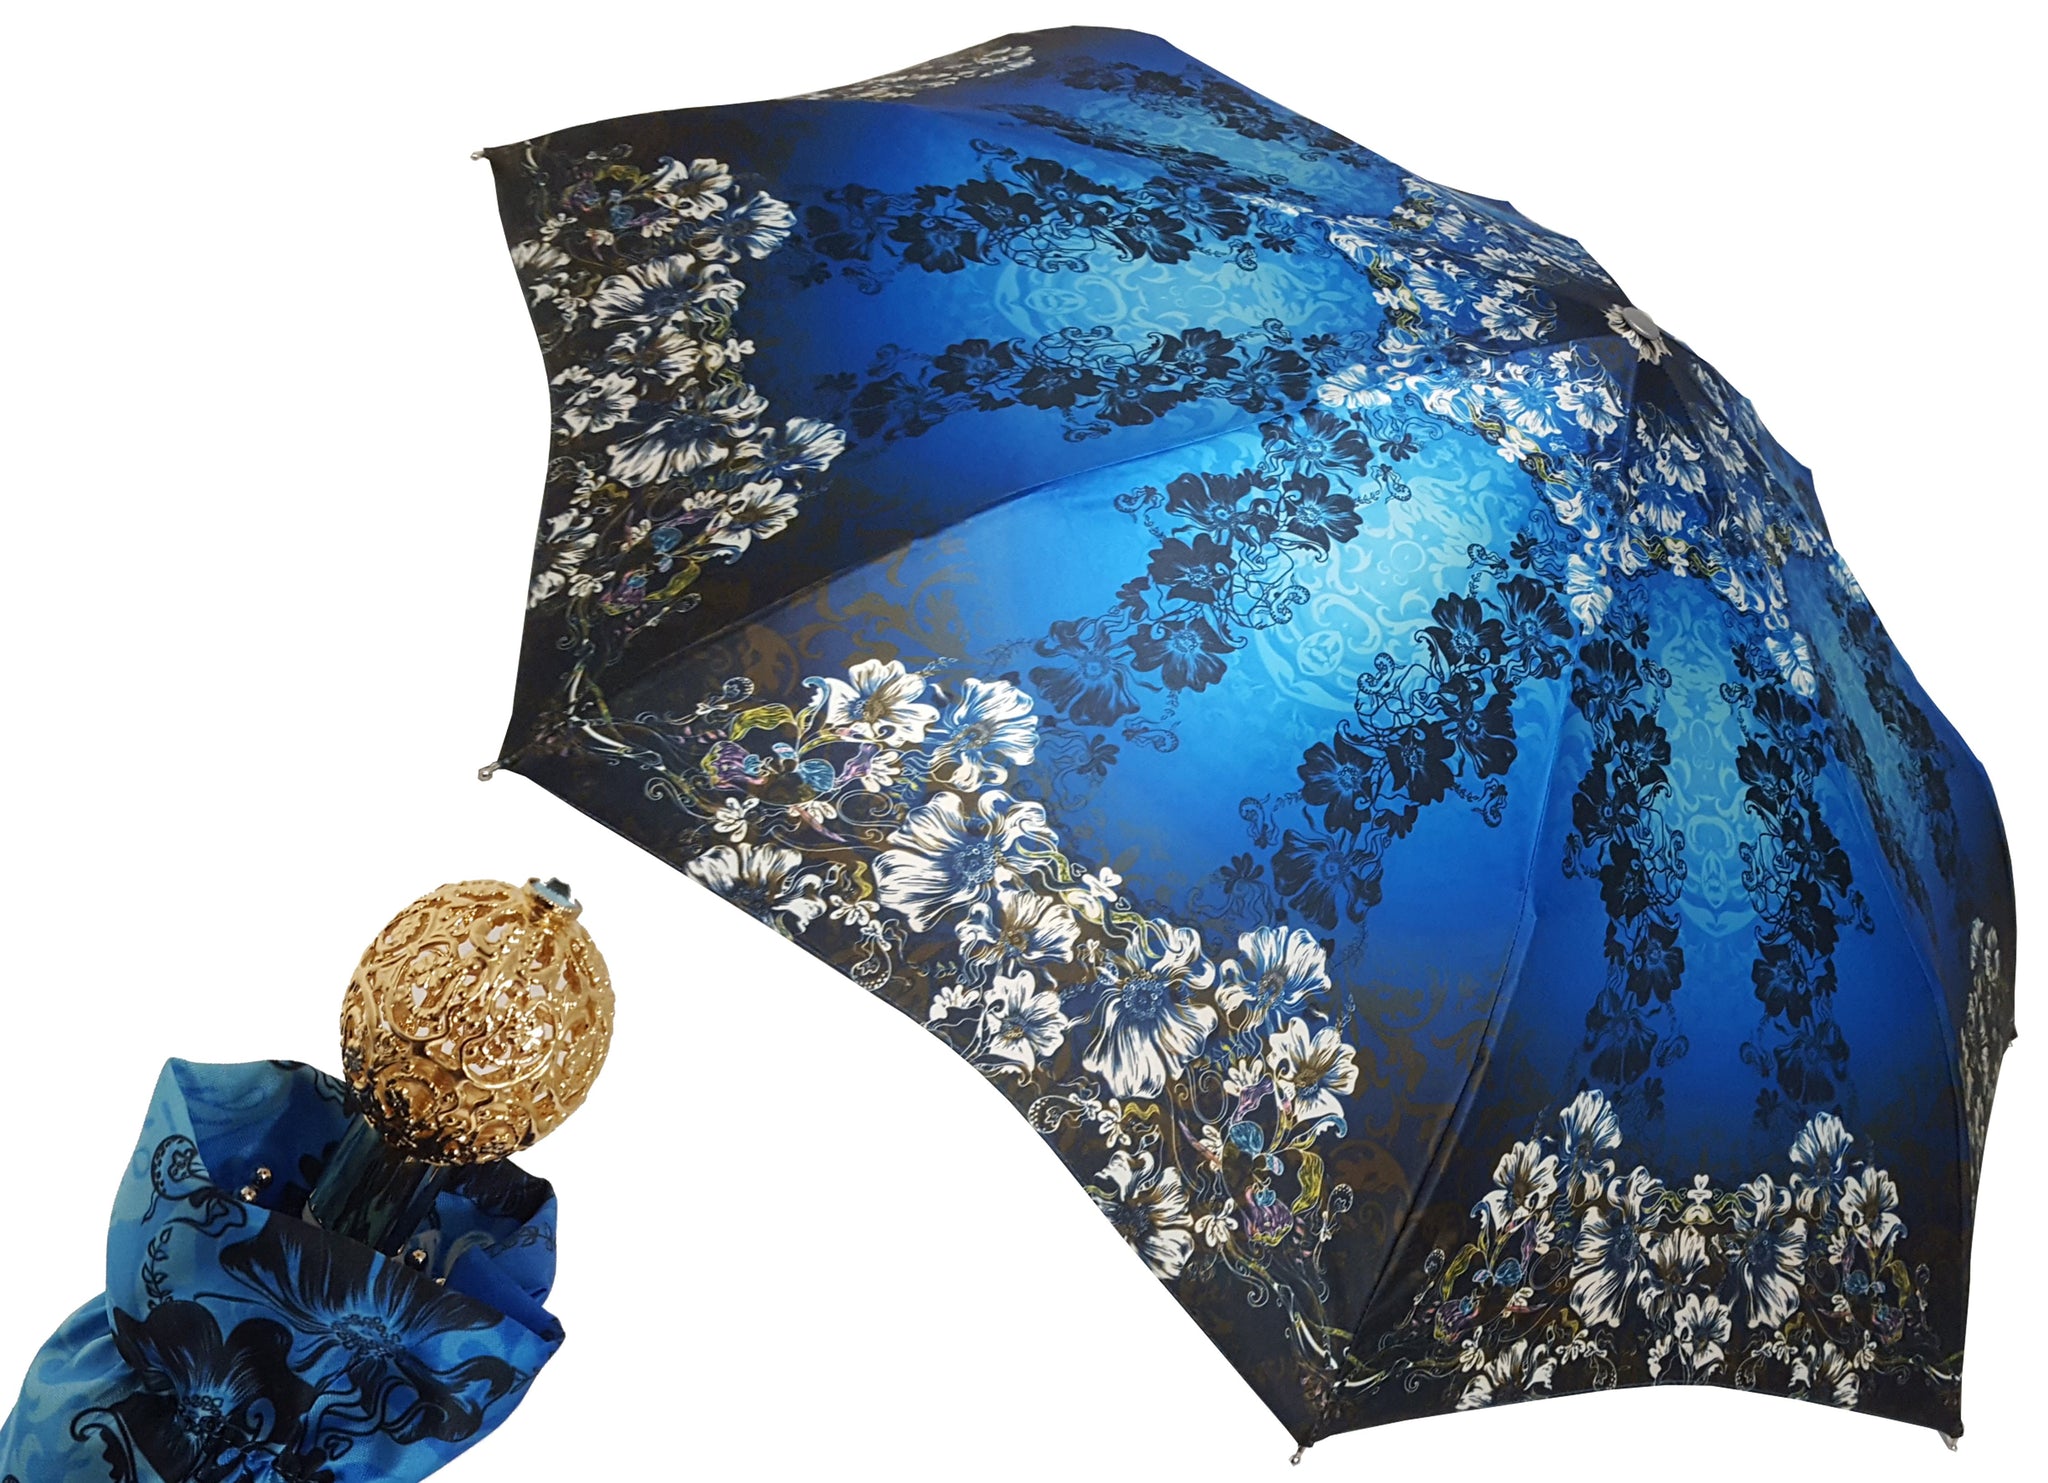 Awesome Blue Flowered Umbrella - il-marchesato